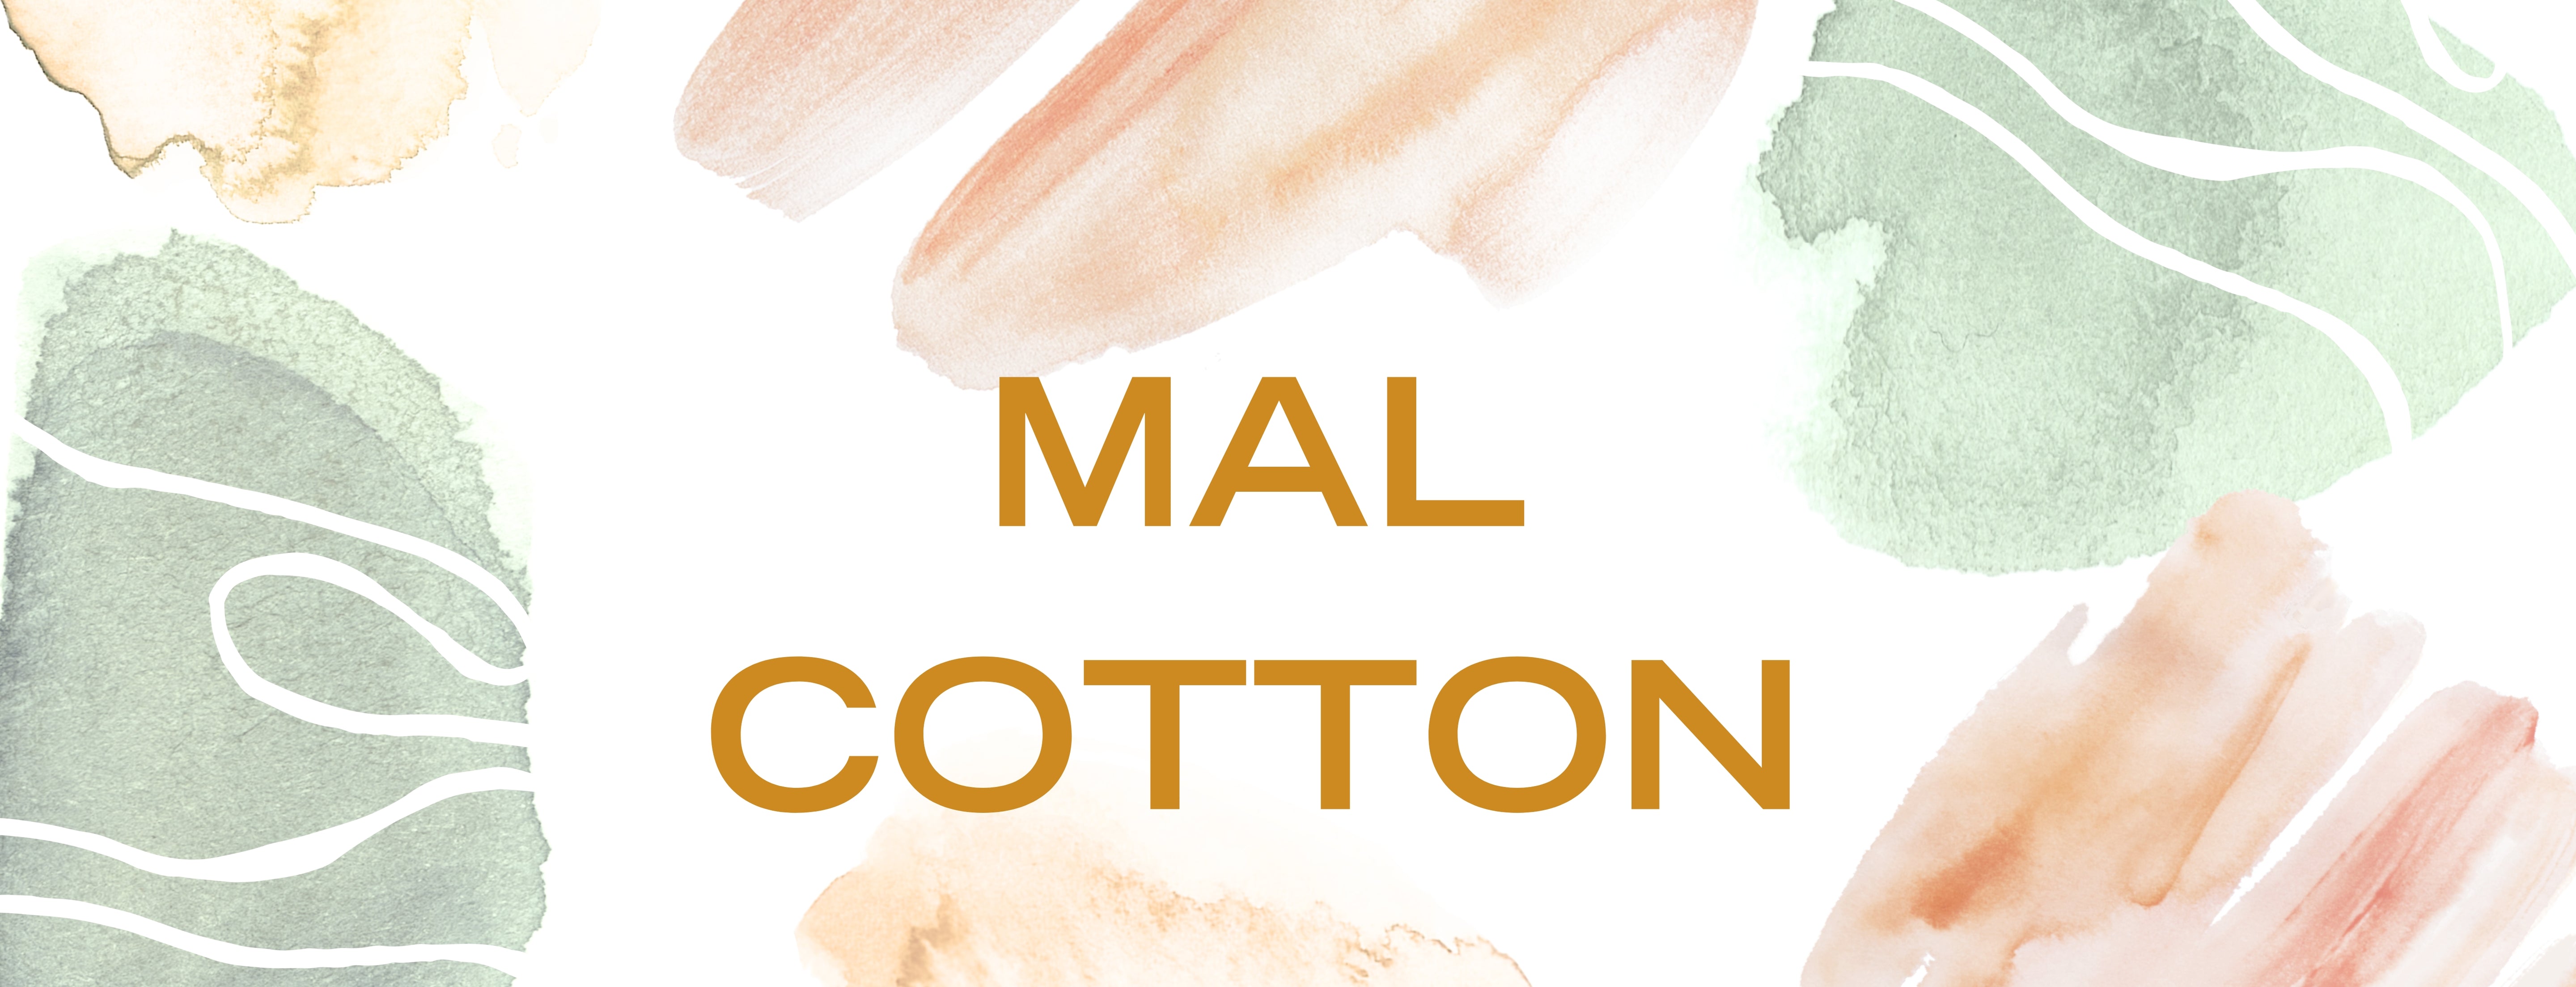 Mal Cotton